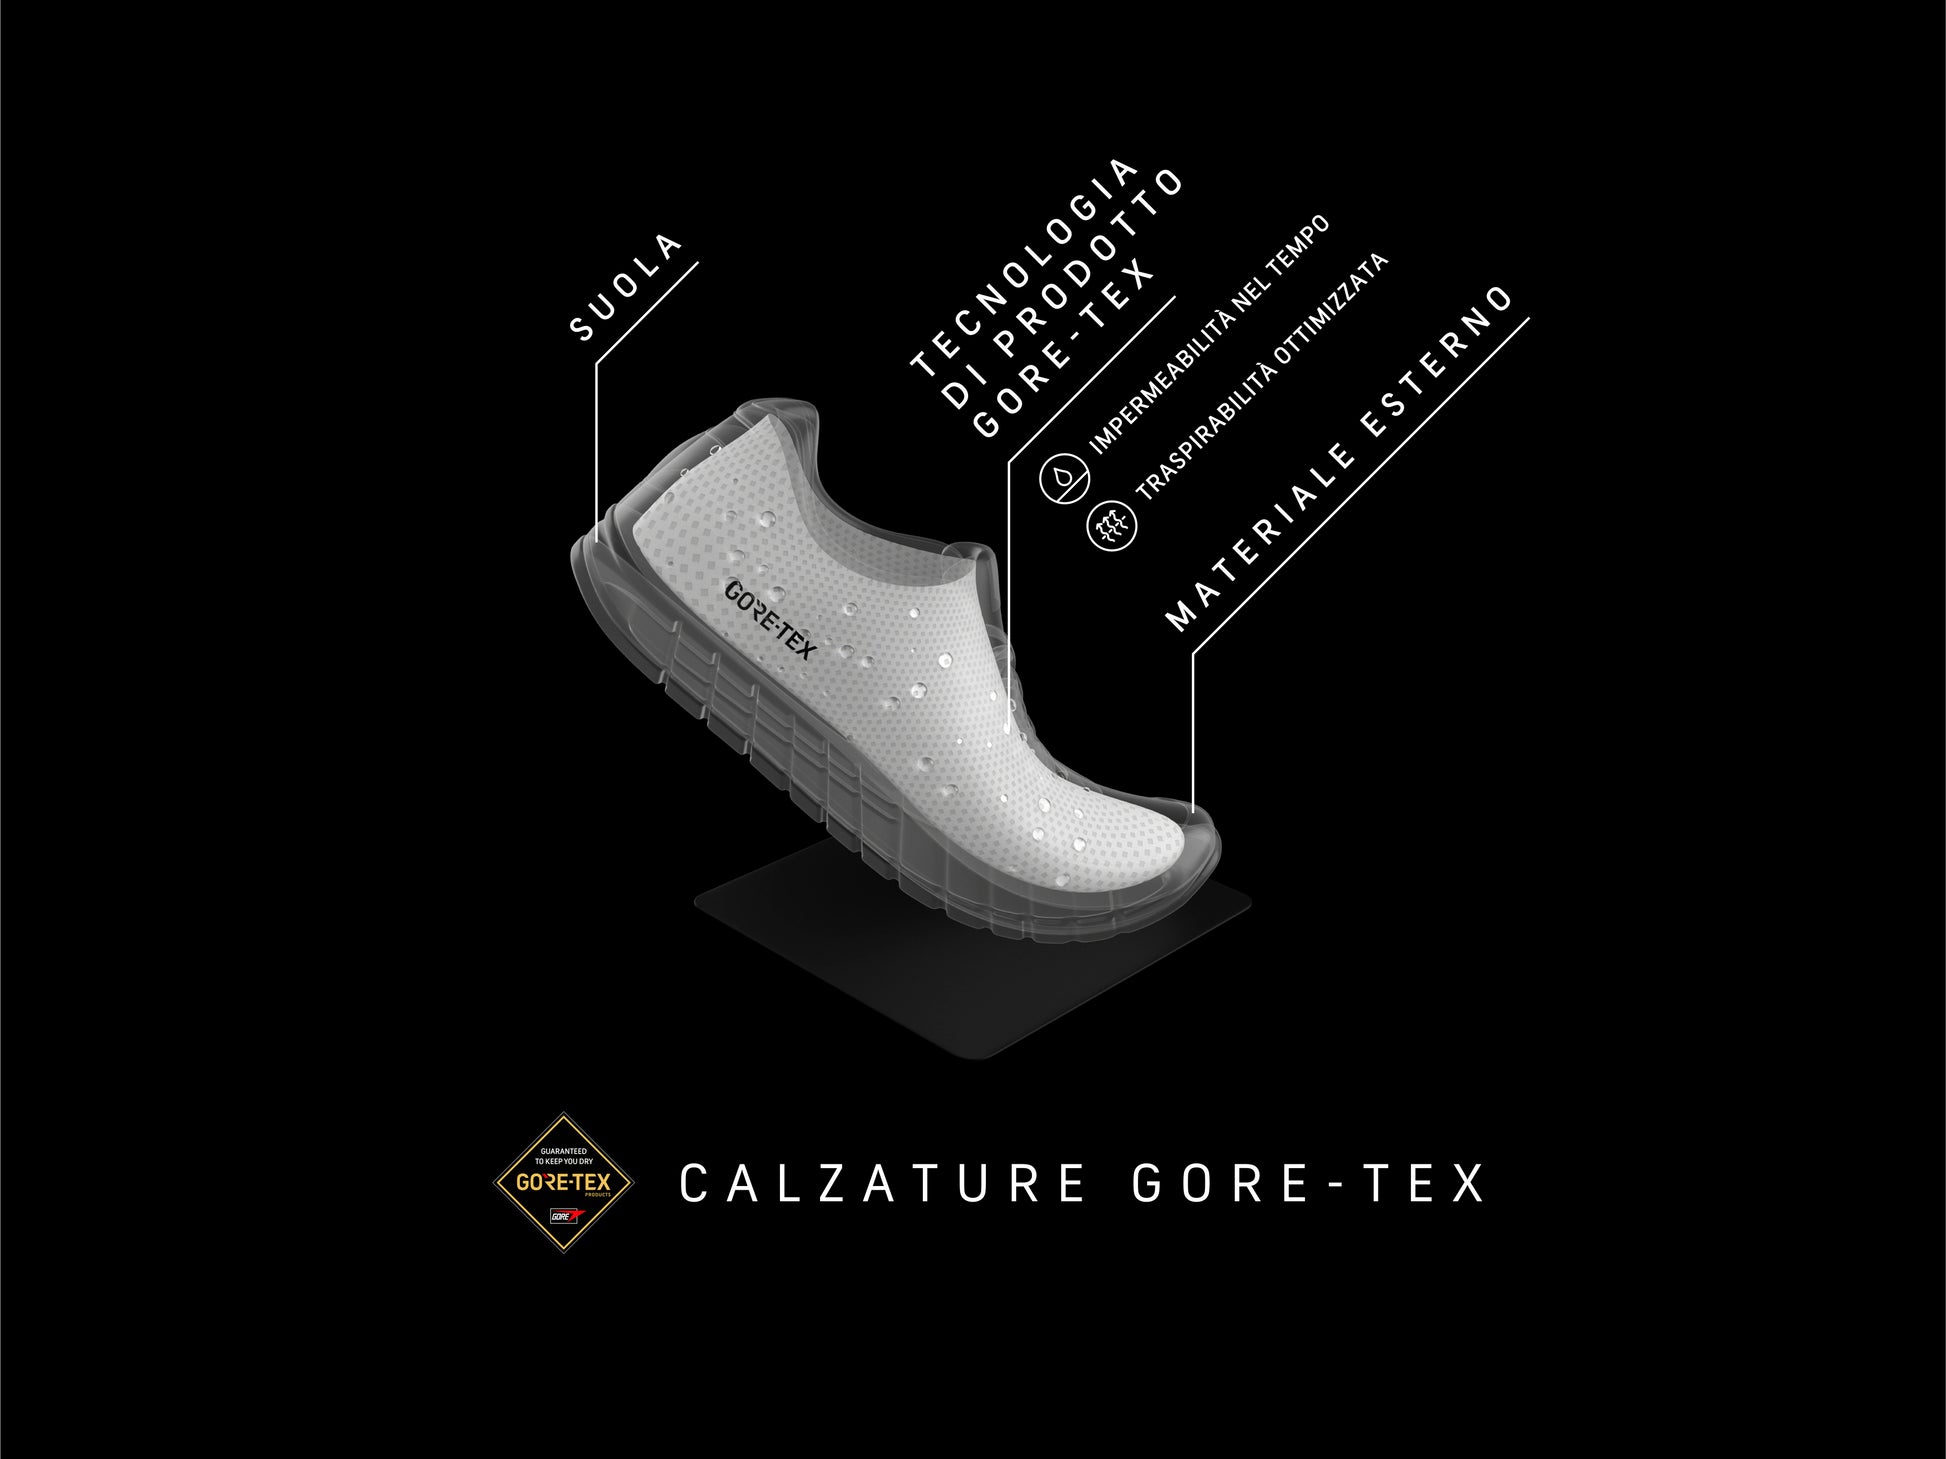 Igi&co Sneakers nabuk -  verde (GORE-TEX) - Igi&co